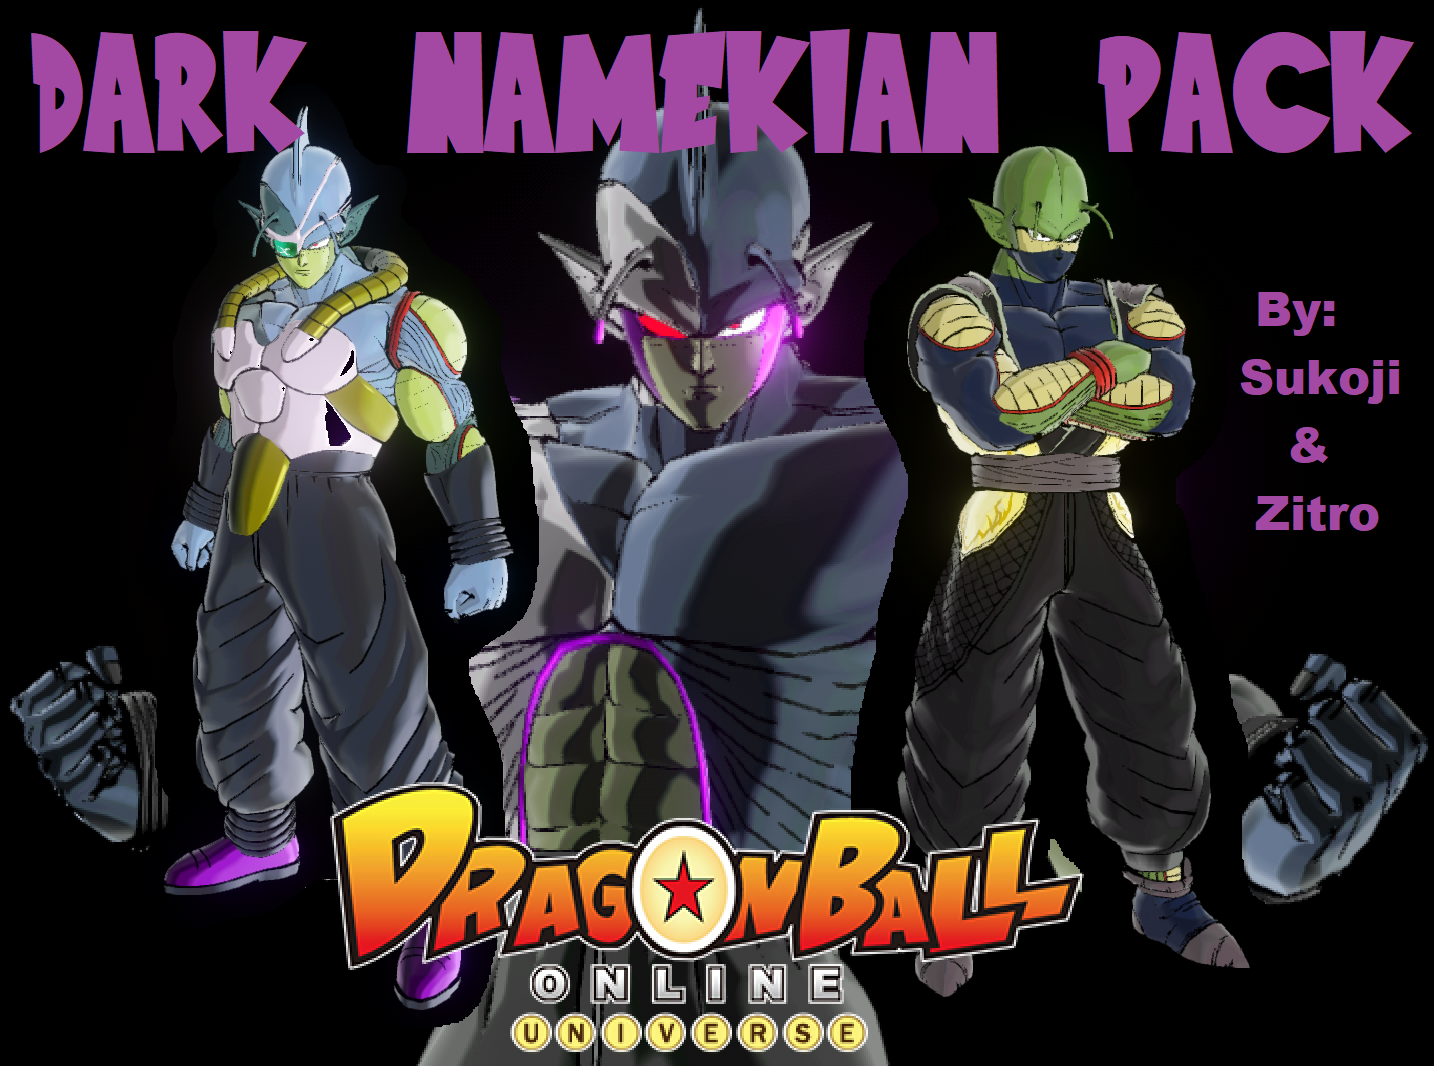 DARK NAMEKIAN PACK (Dragon Ball Online) – Xenoverse Mods